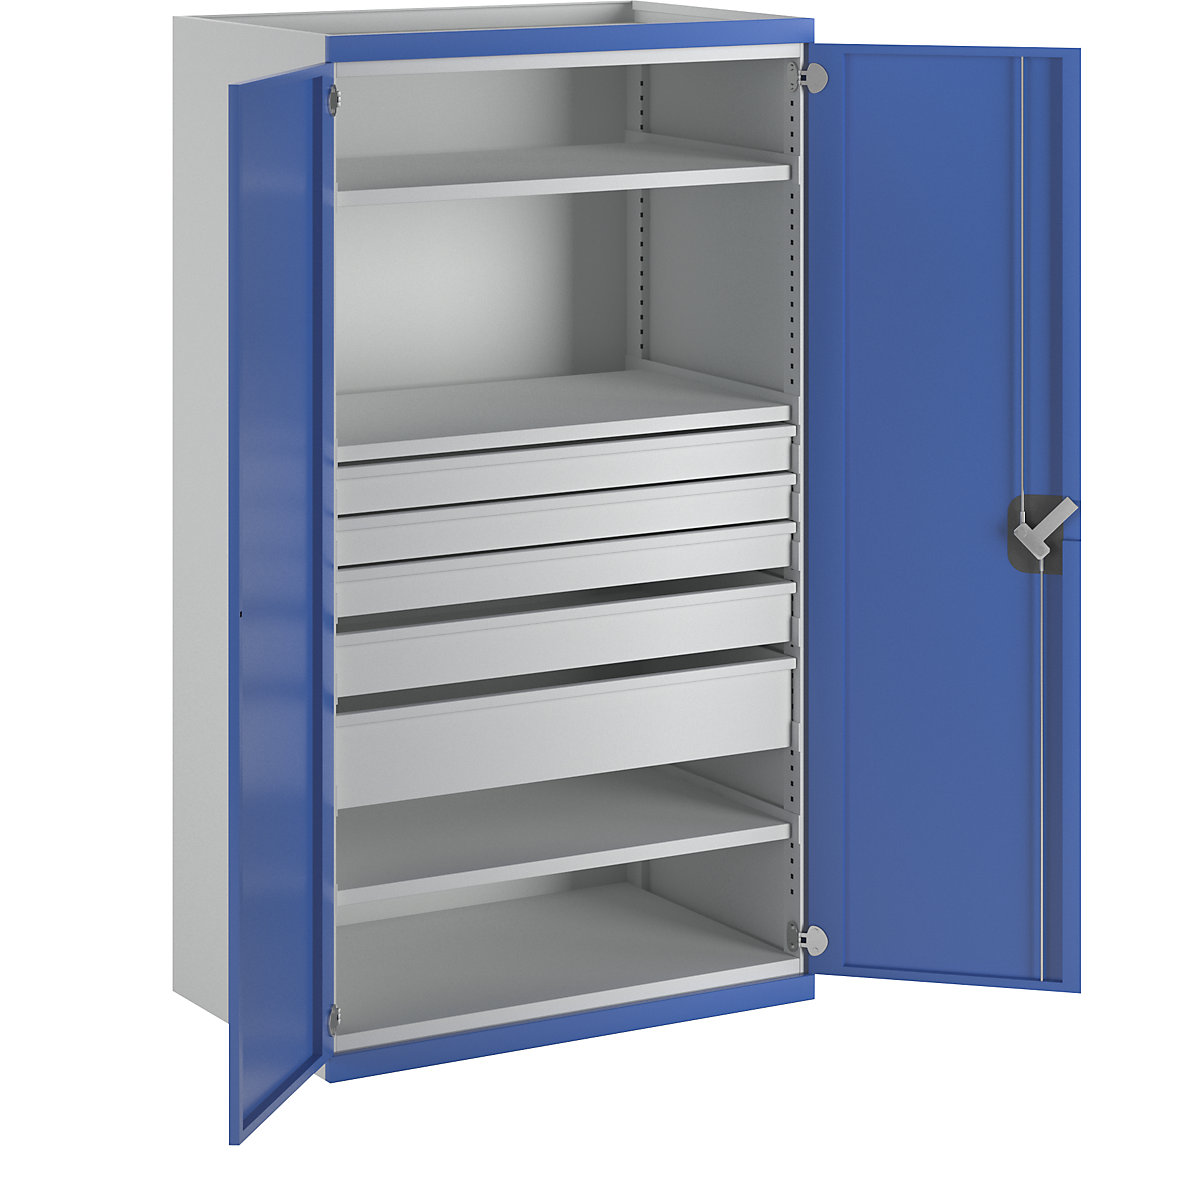 Heavy duty cupboard with 3 shelves – ANKE